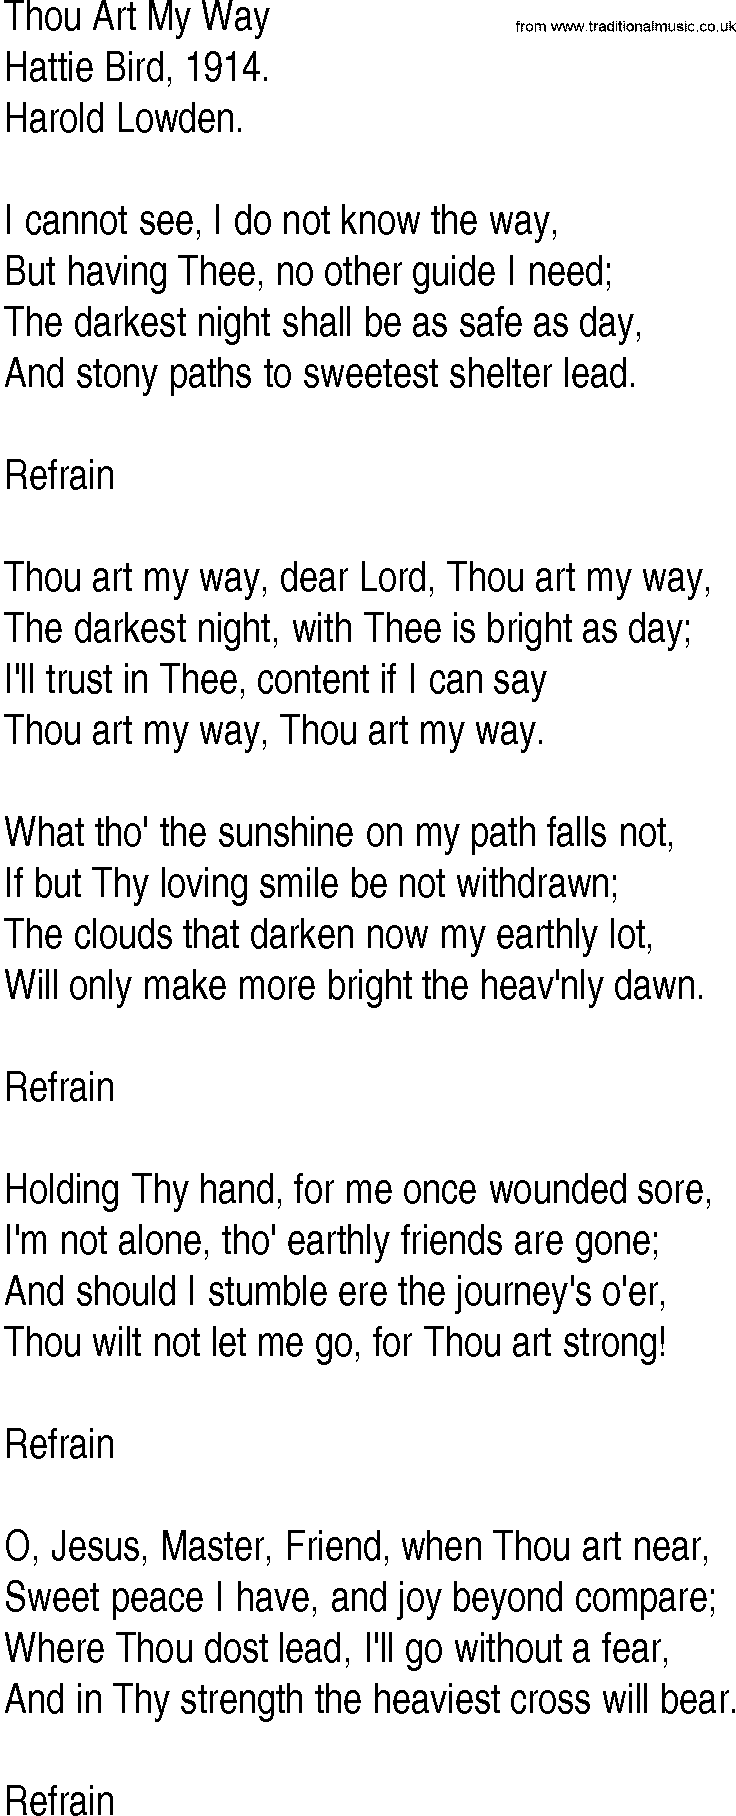 Hymn and Gospel Song: Thou Art My Way by Hattie Bird lyrics